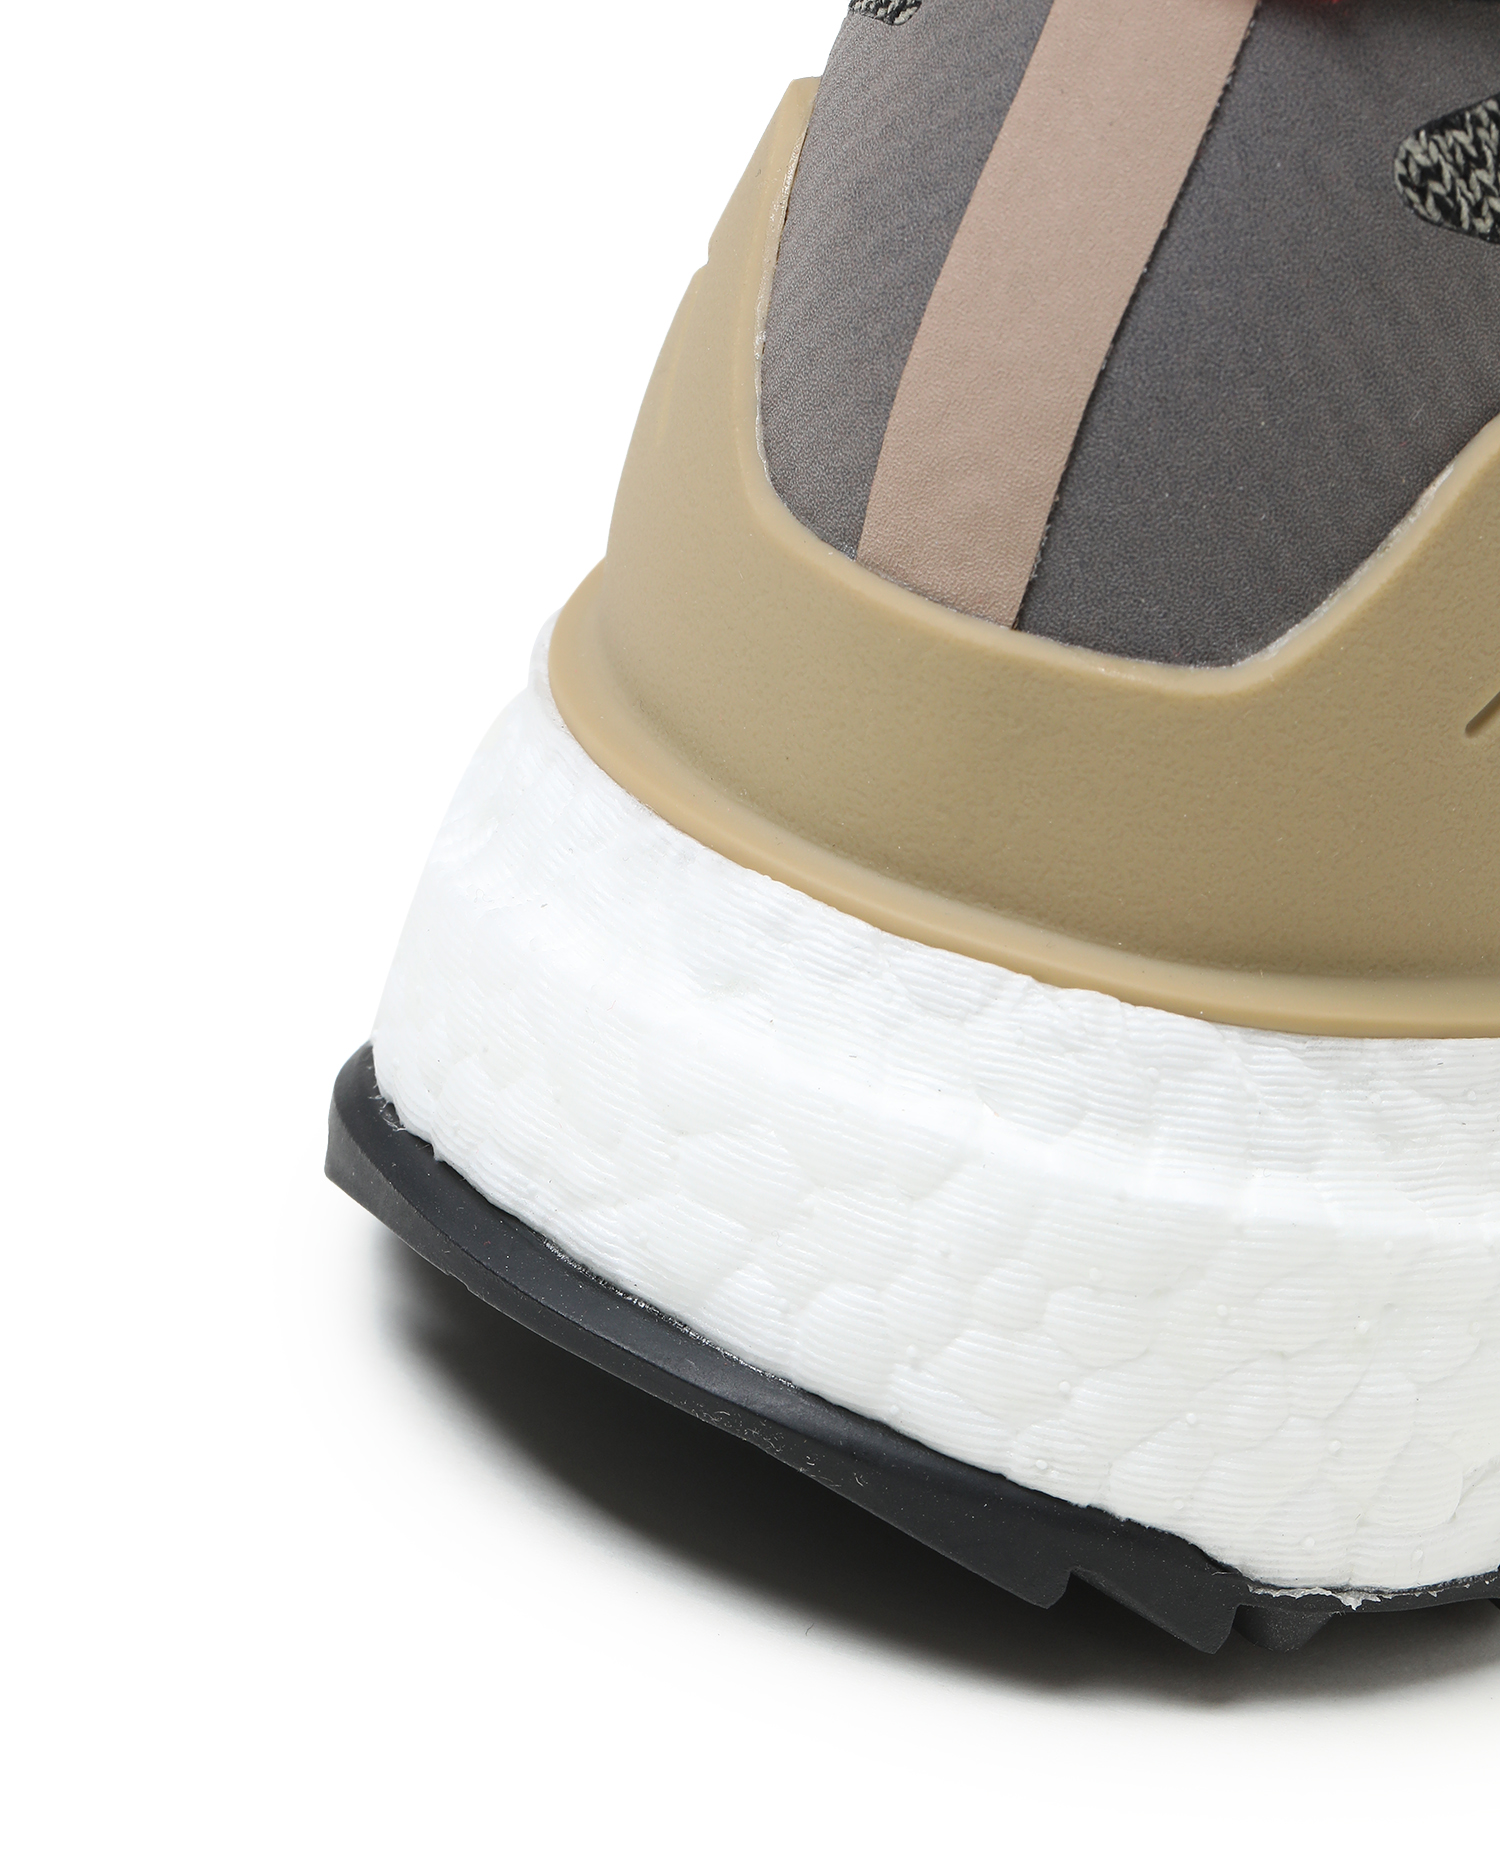 adidas terrex free hiker sneaker boots